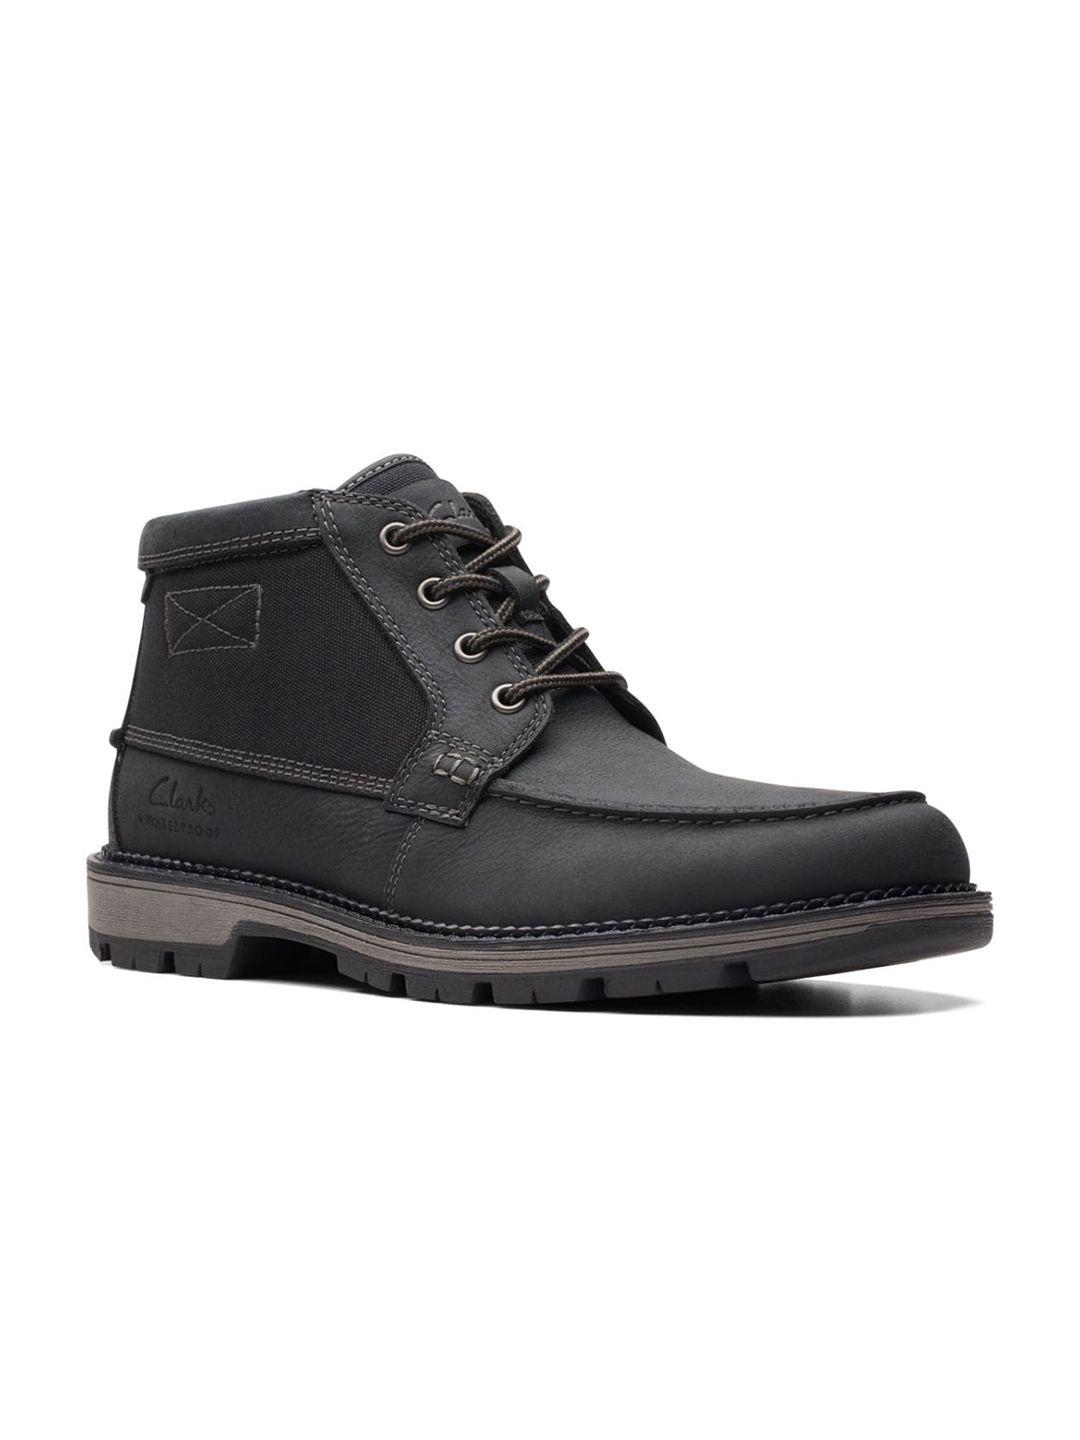 clarks-men-textured-leather-mid-top-regular-boots